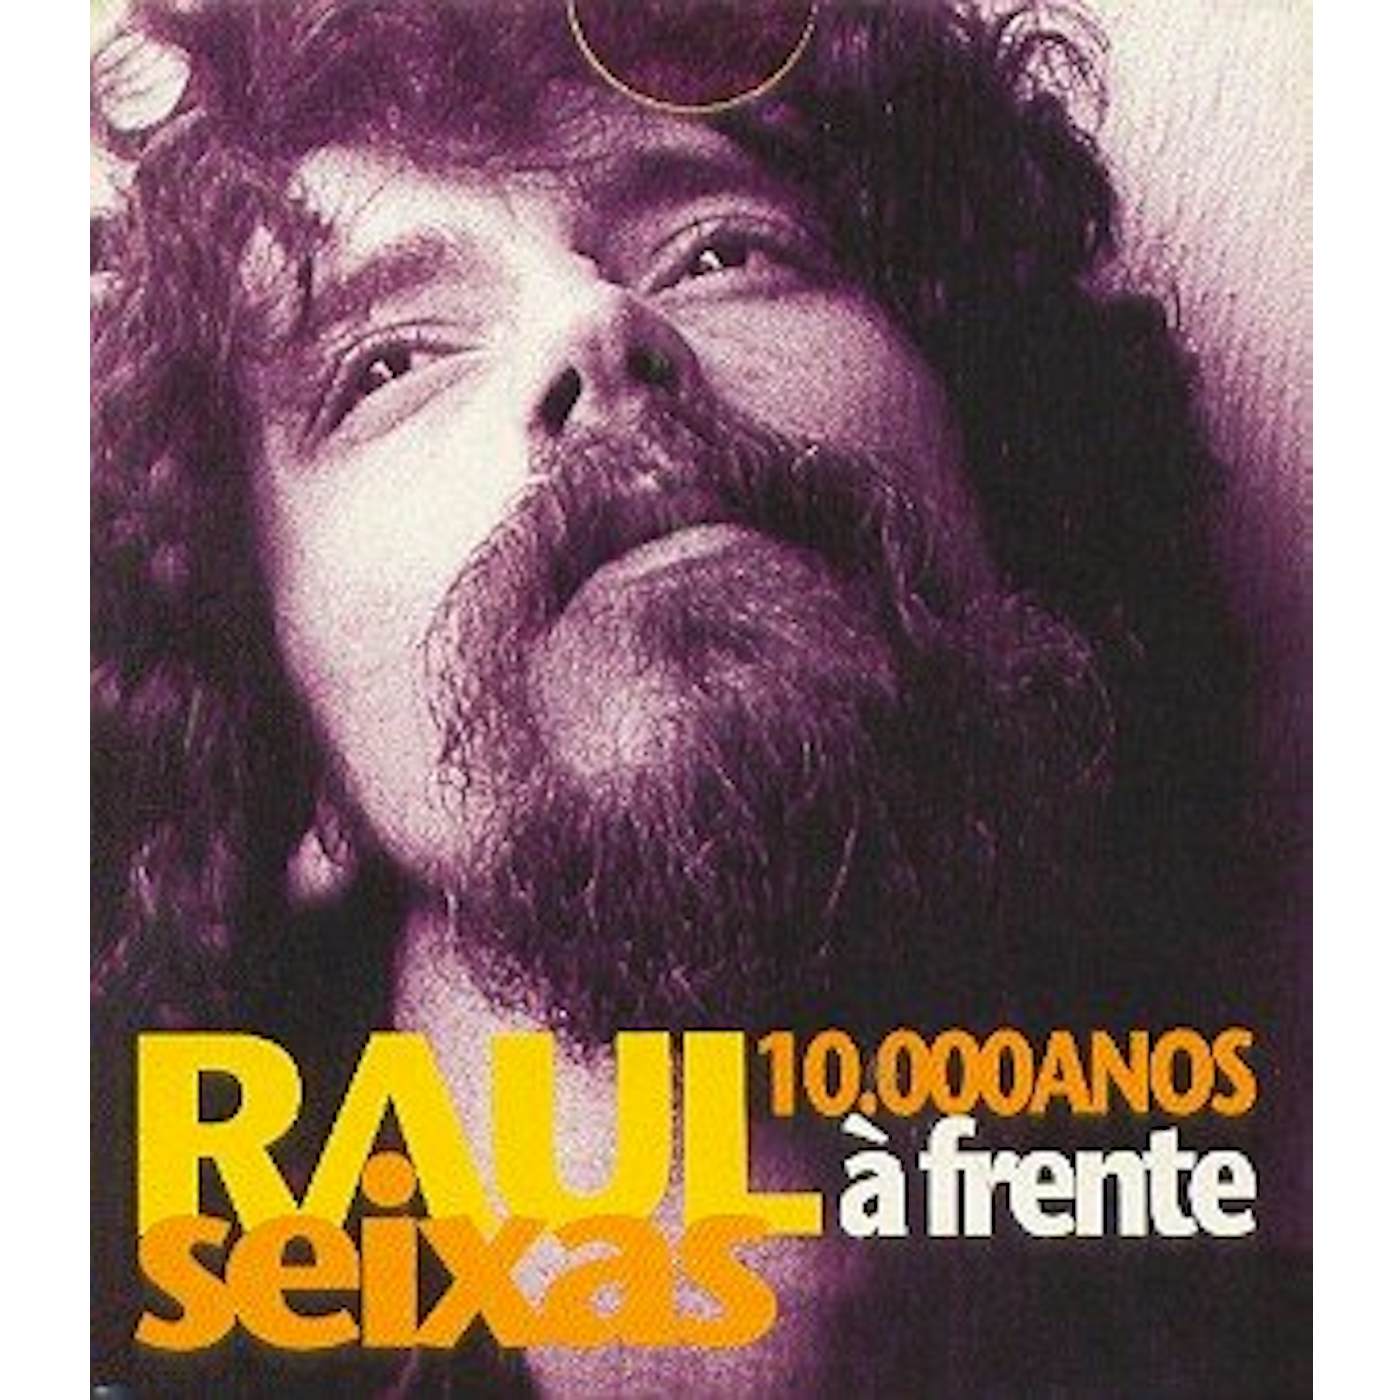 Raul Seixas 10,000 ANOS A FRENTE CD